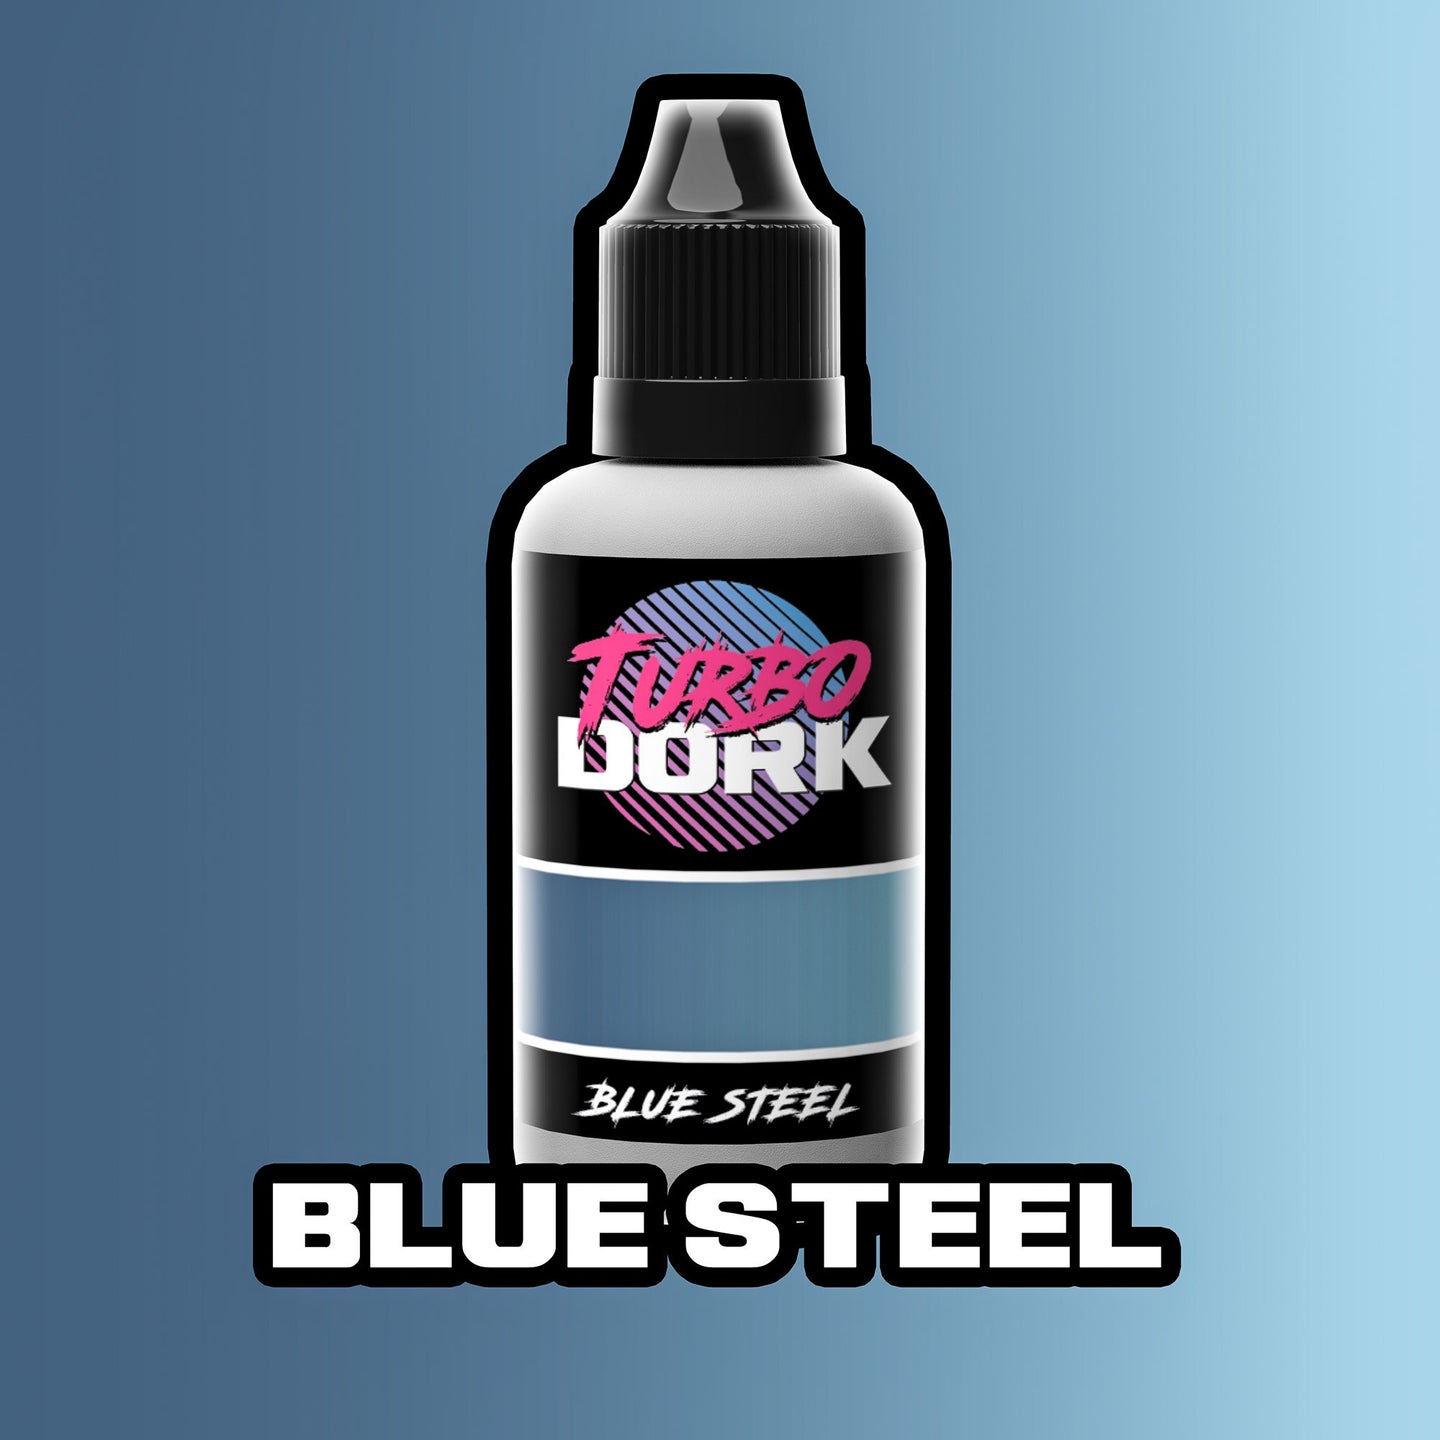 Blue Steel Metallic Acrylic Paint 20ml Bottle - Linebreakers